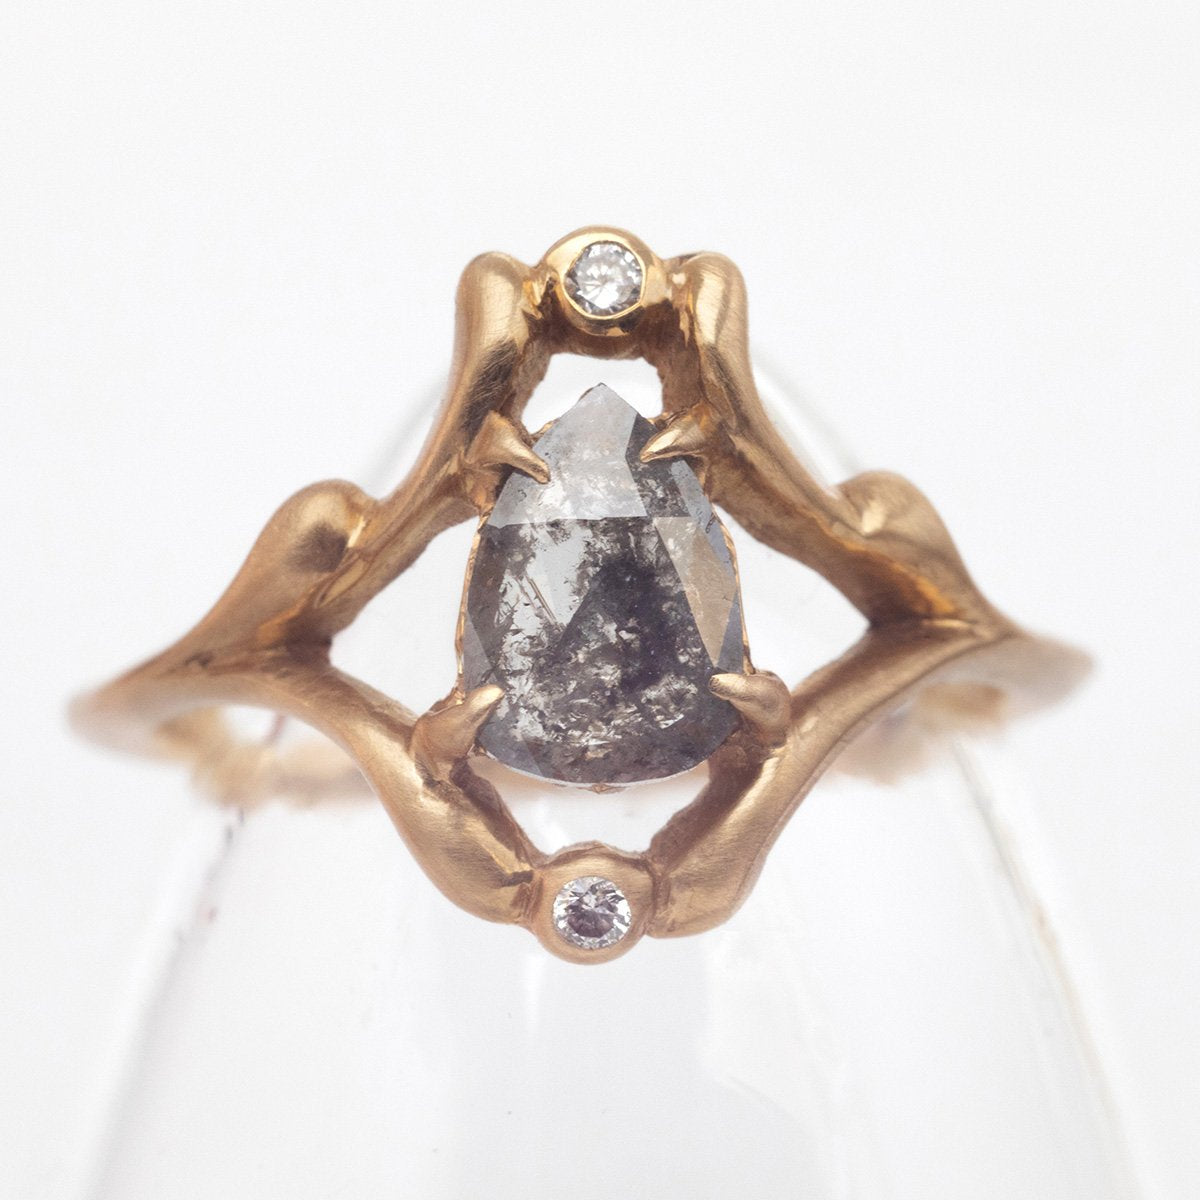 Tear Shaped Rustic Diamond Ring with Vine Motif (18k)